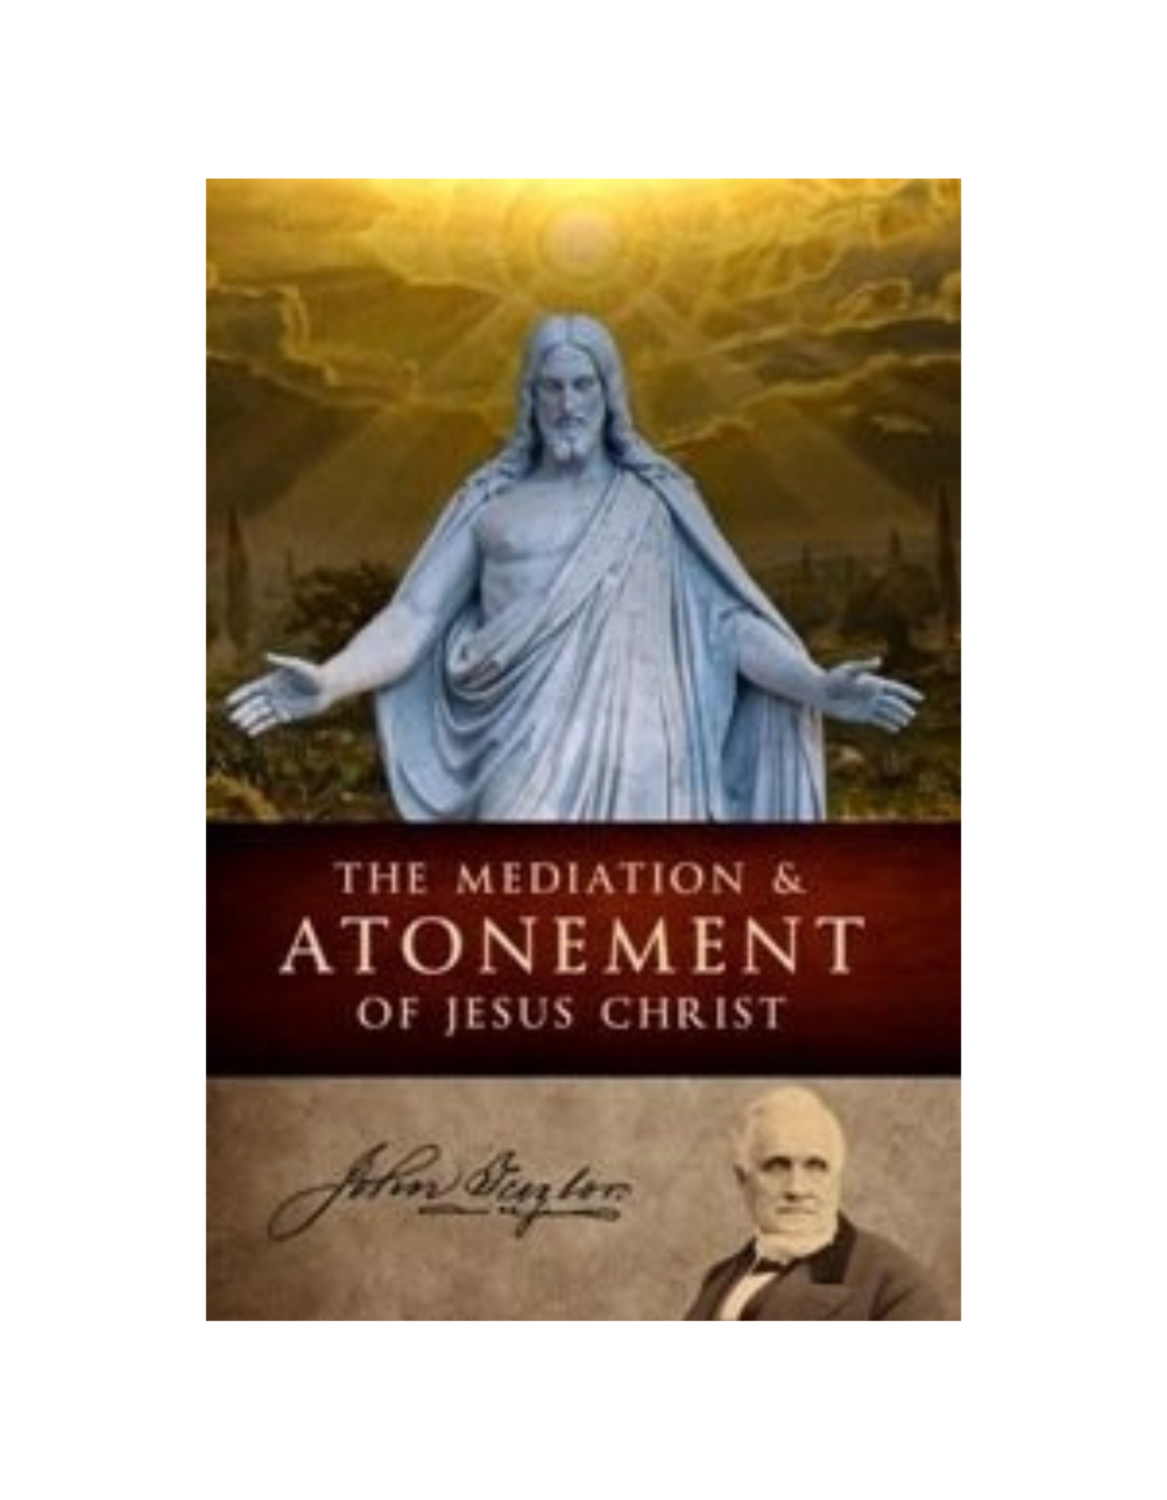 Mediation & Atonement of Jesus Christ, The (1882)